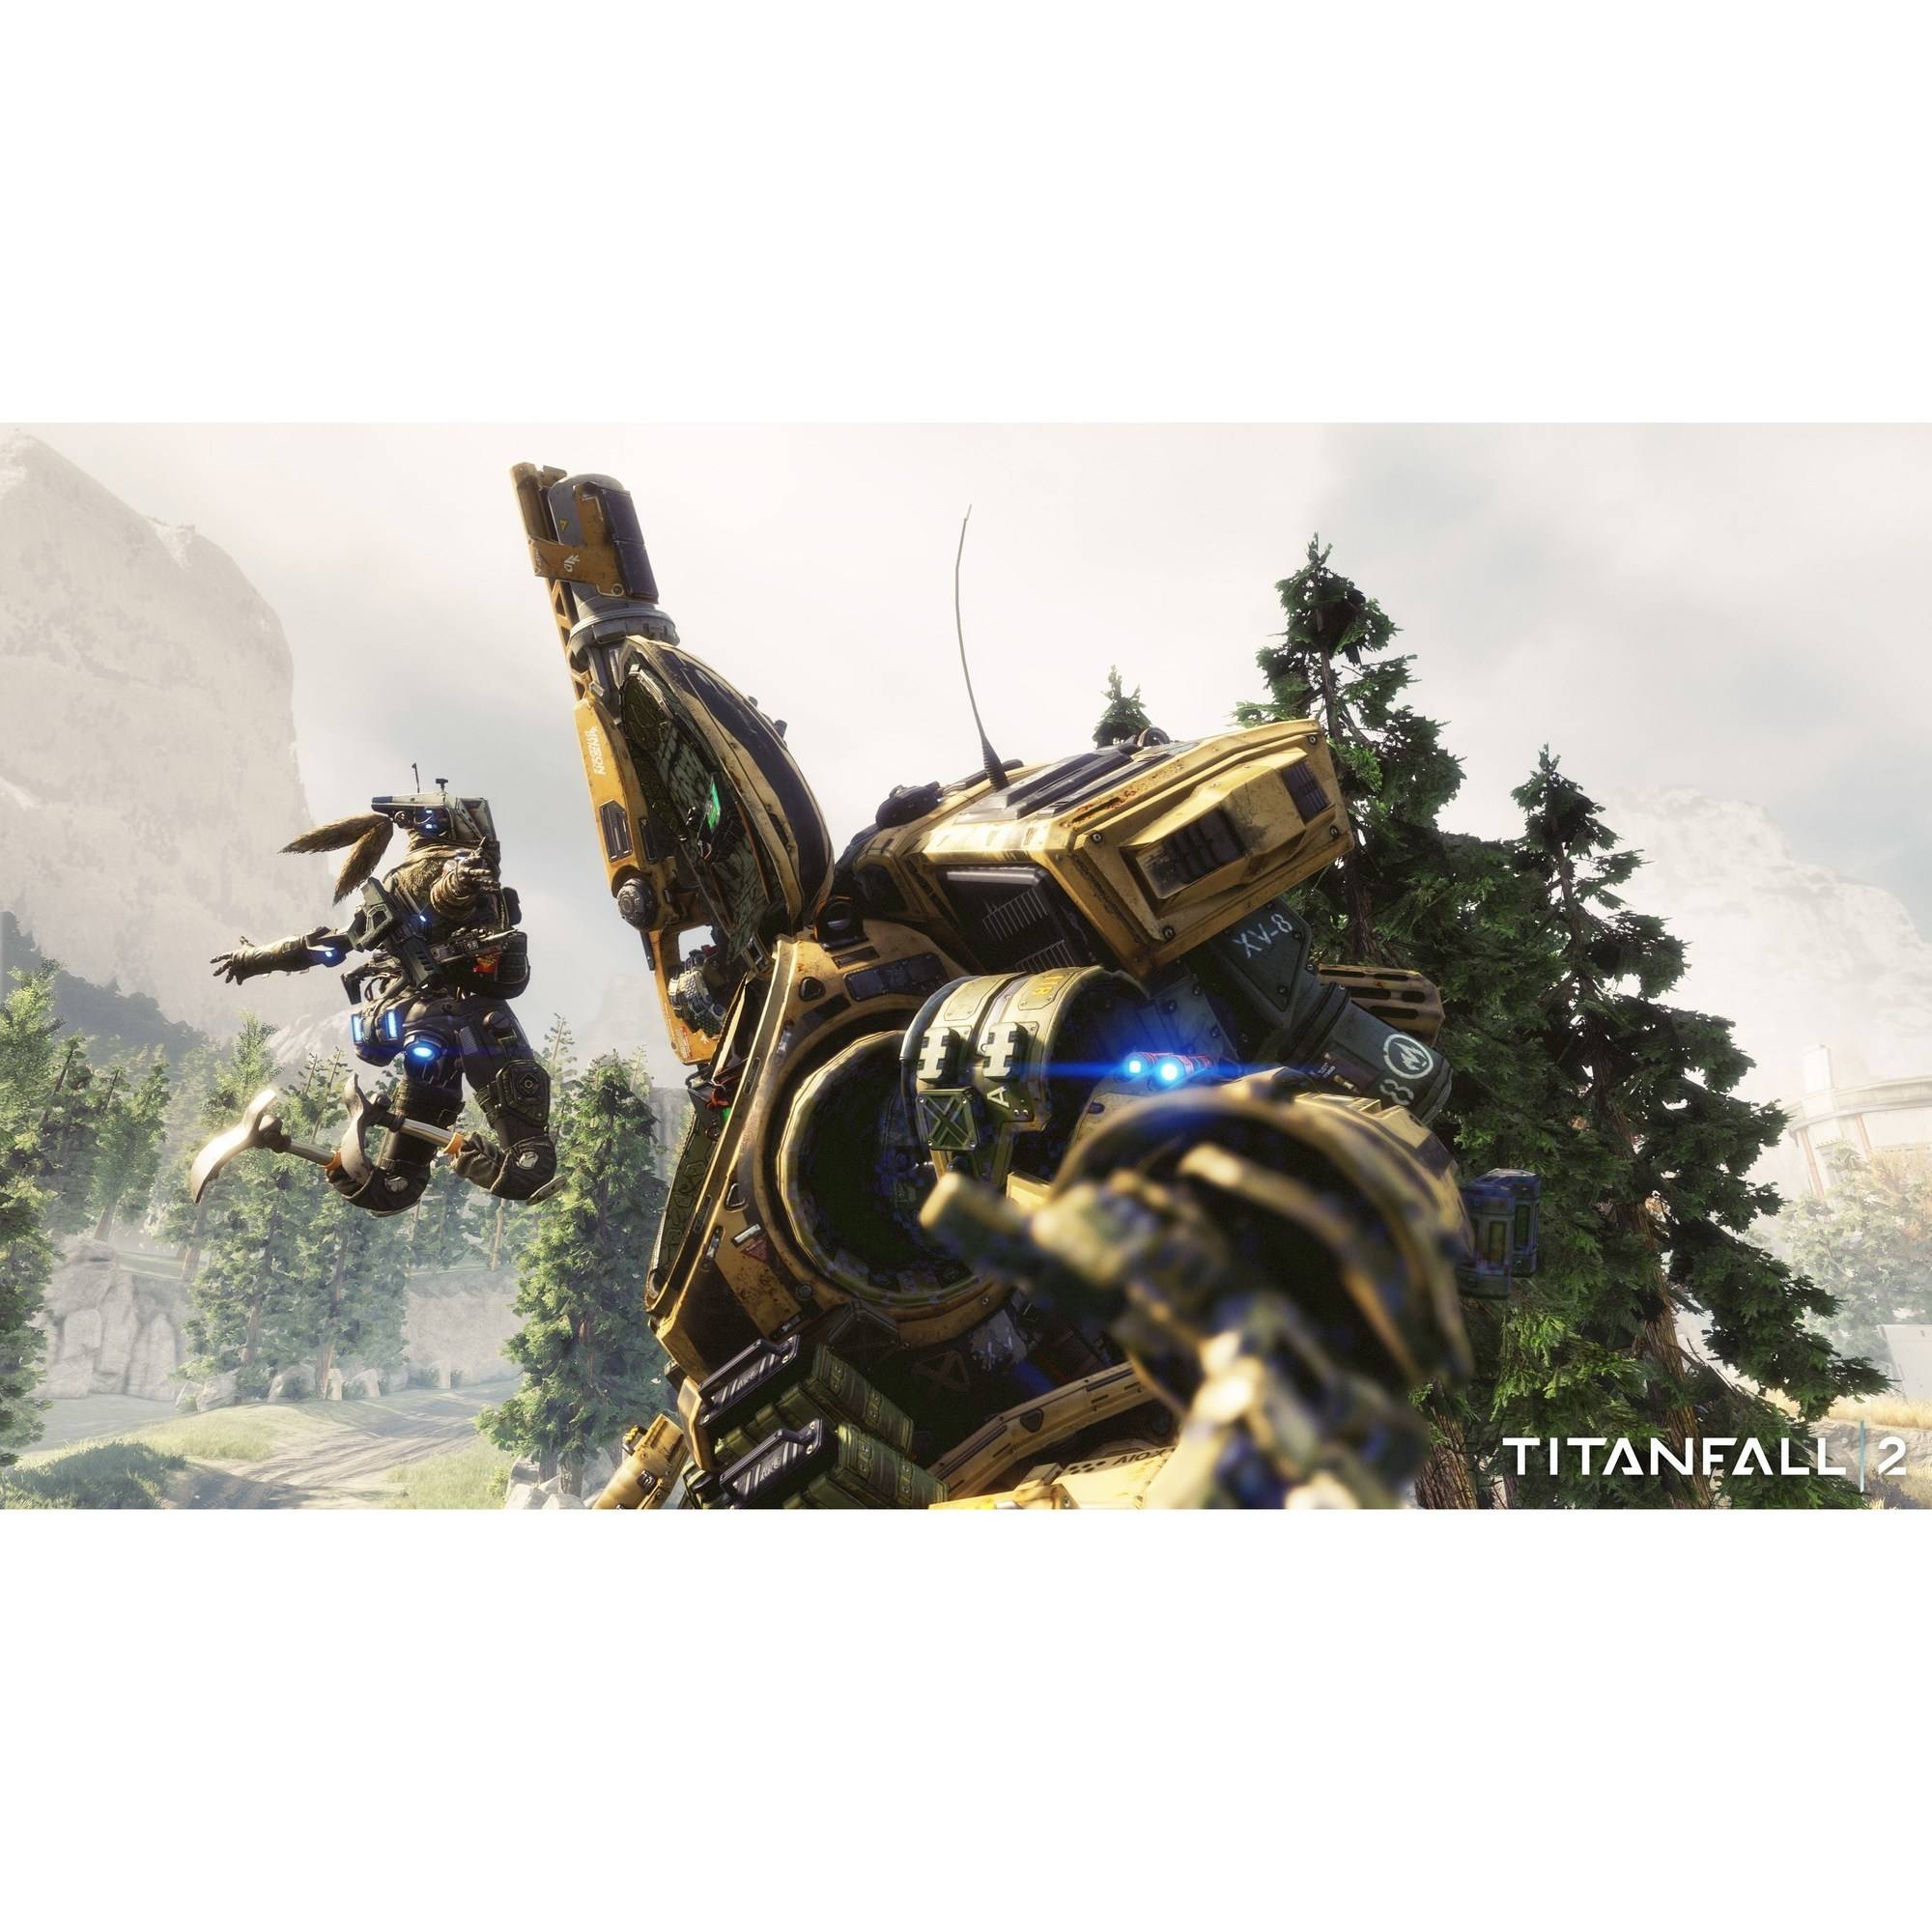 Titanfall 2, Electronic Arts, Xbox One, 014633368758 - image 7 of 8